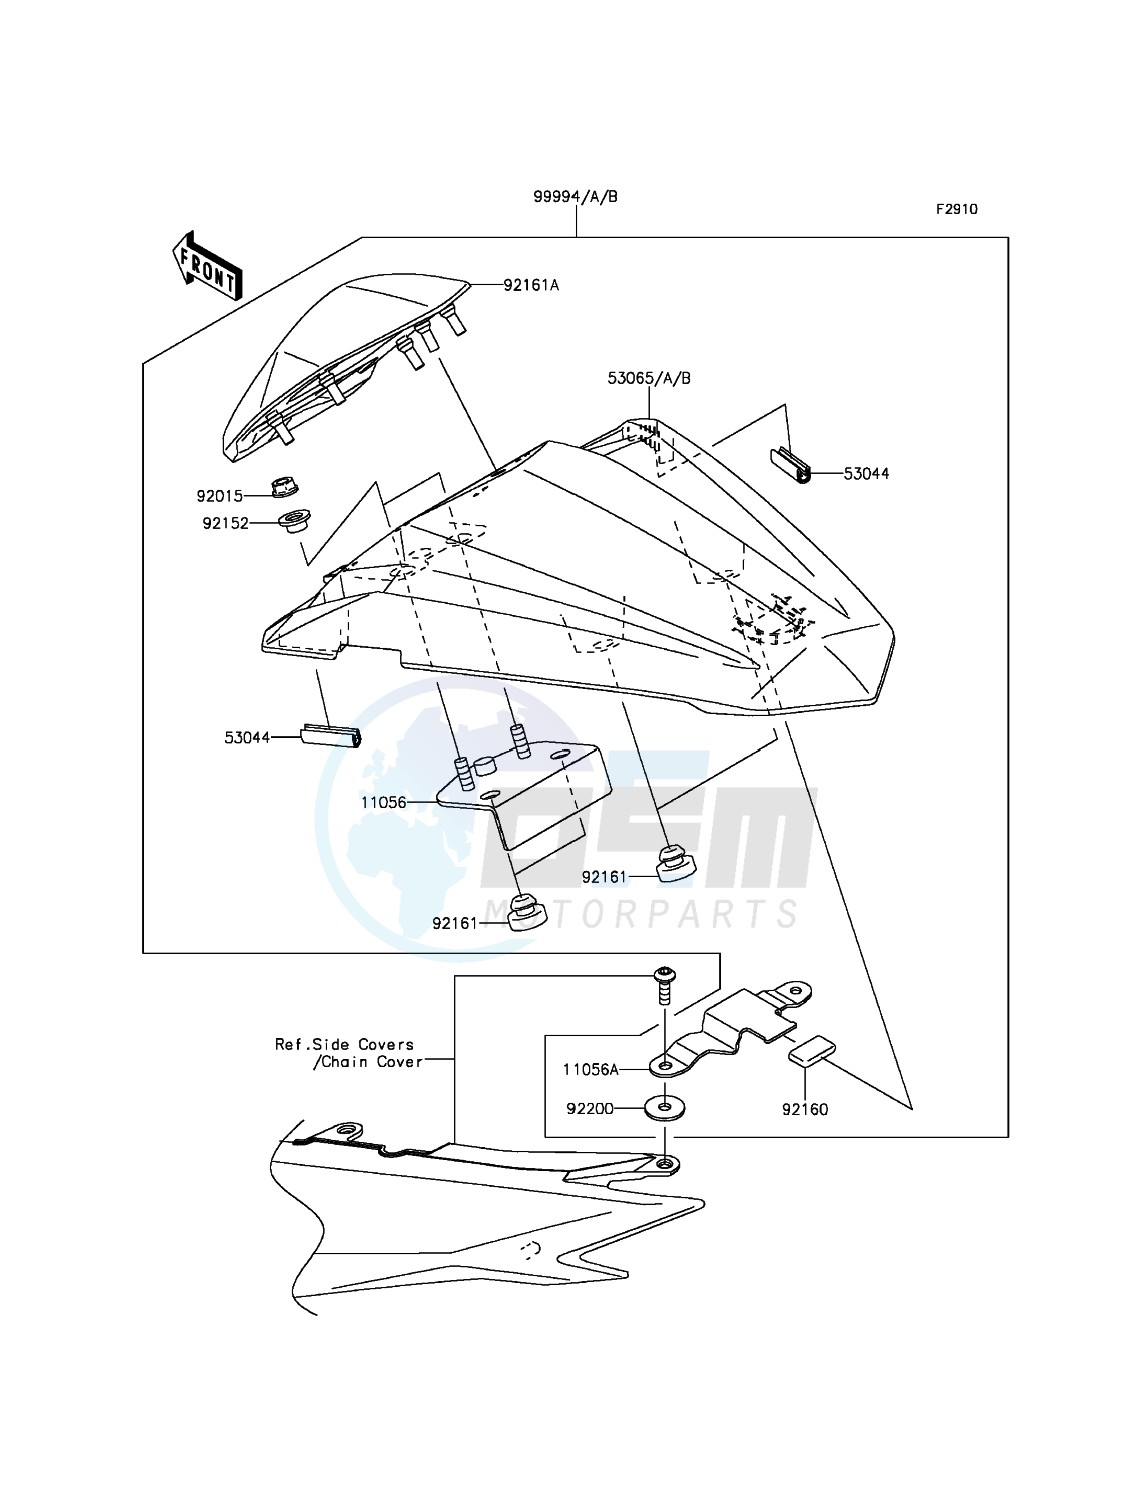 Accessory(Single Seat Cover) blueprint